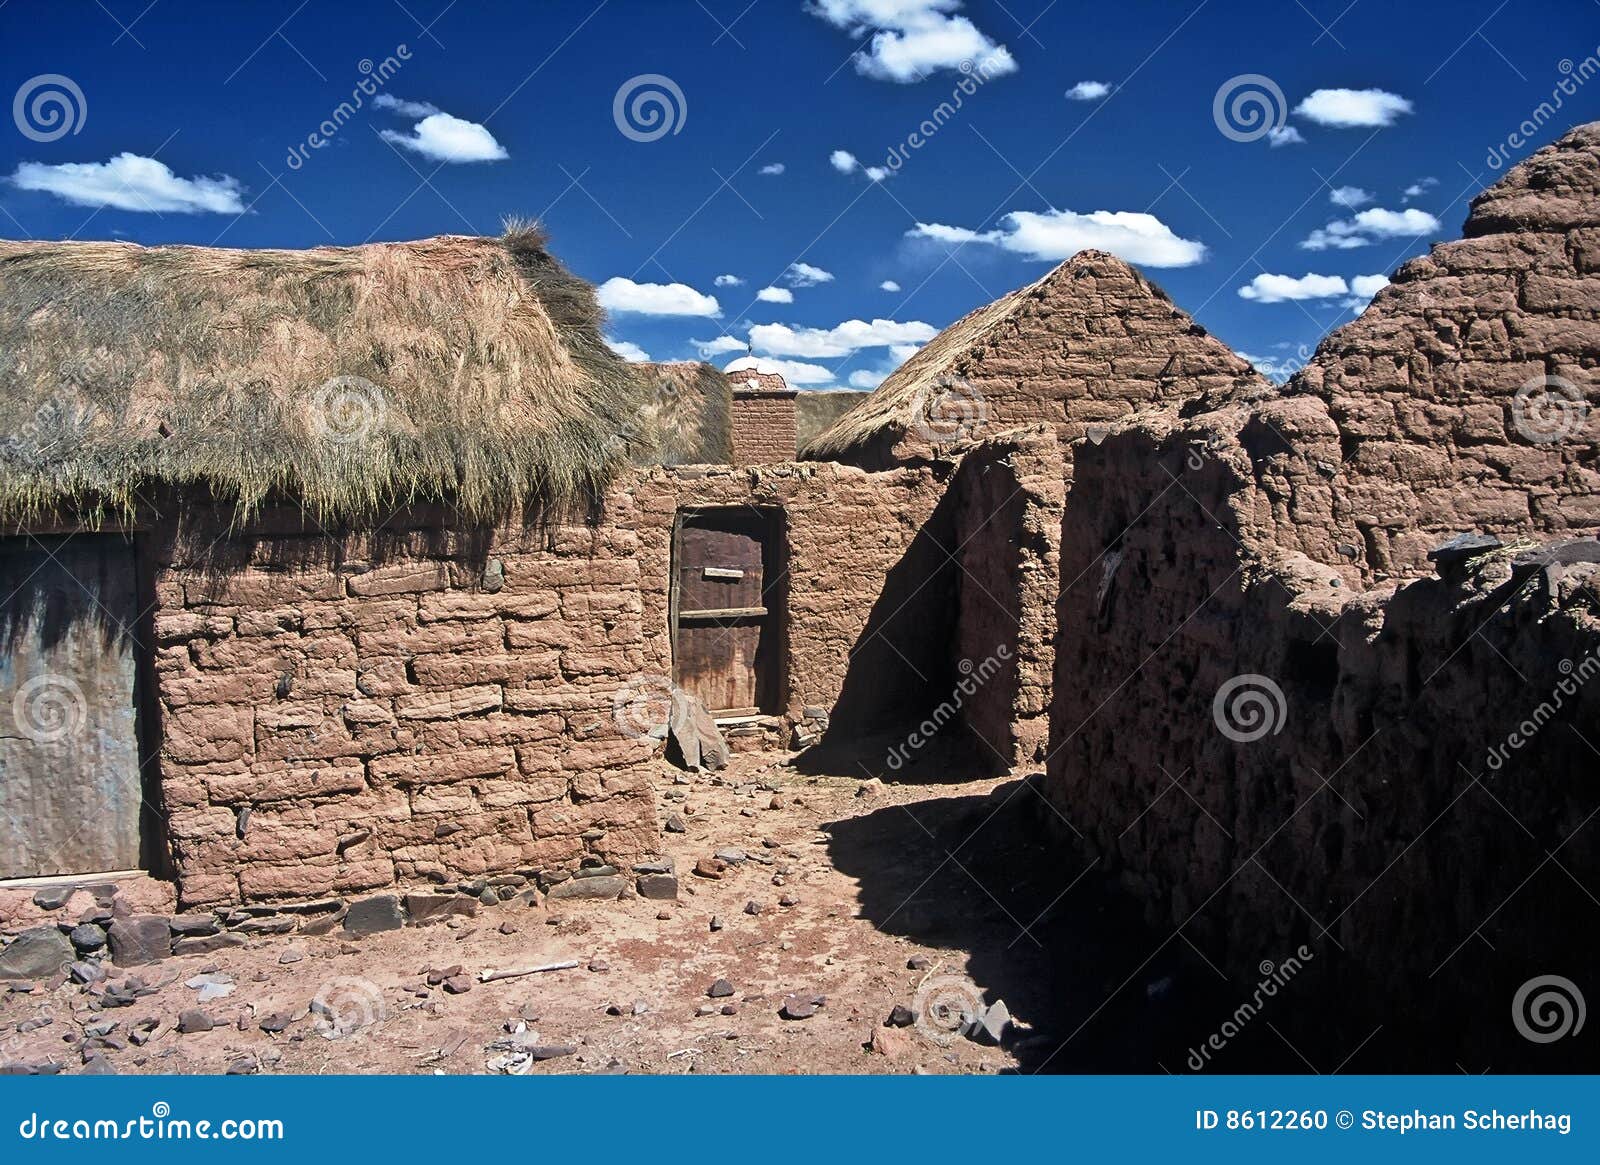 houses on altiplano in bolivia, bolivia